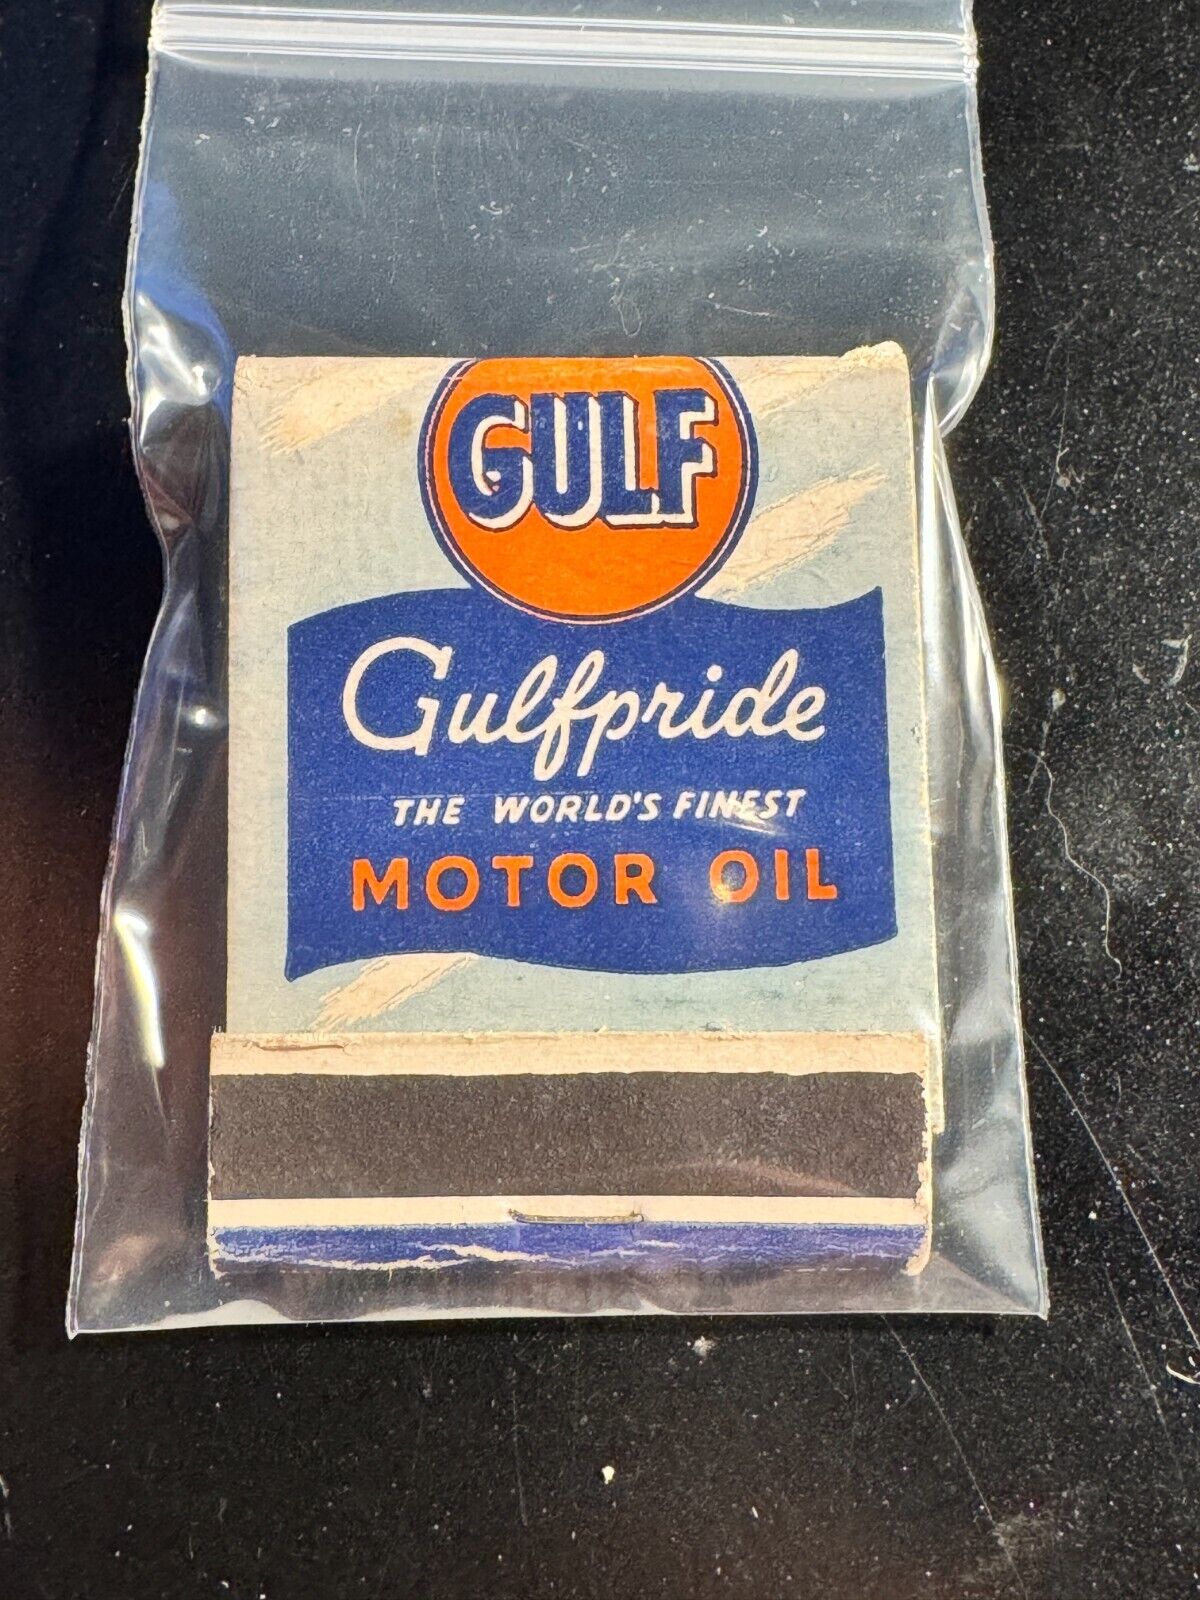 MATCHBOOK - GULF MOTOR OIL - GULFPRIDE - NEWBURY AUTO - NEWPORT, OH - UNSTRUCK